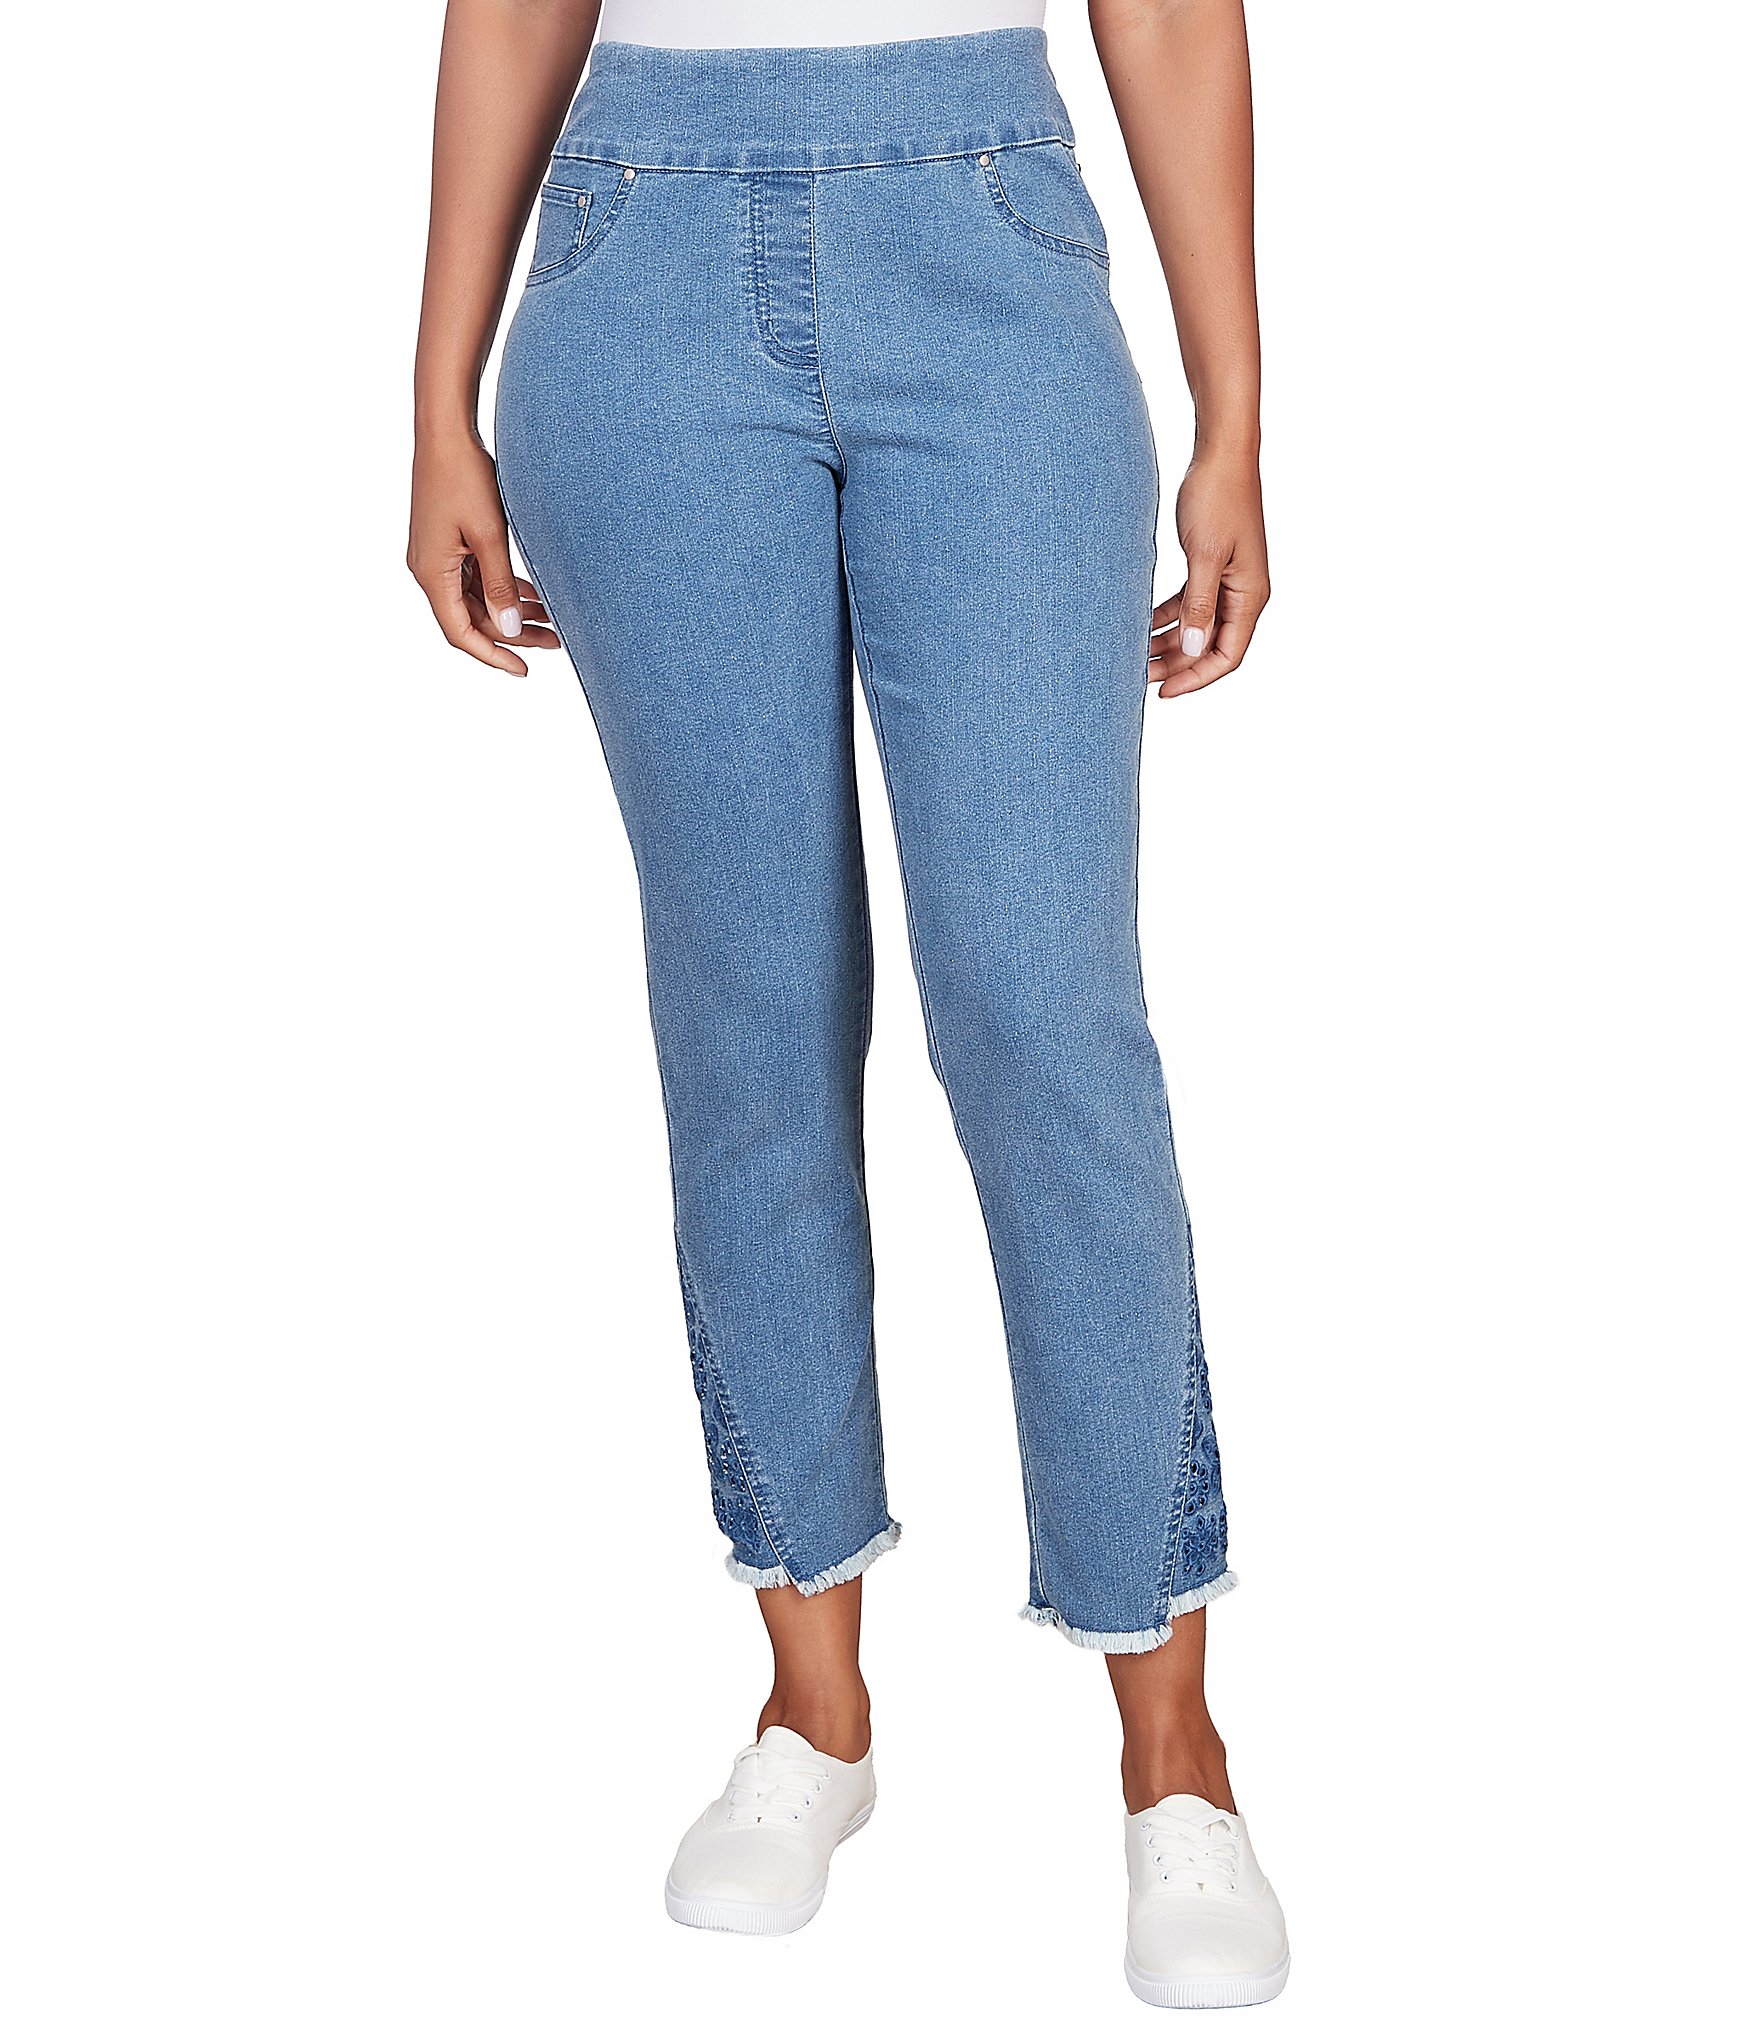 elastic waist jeans: Women's Pants